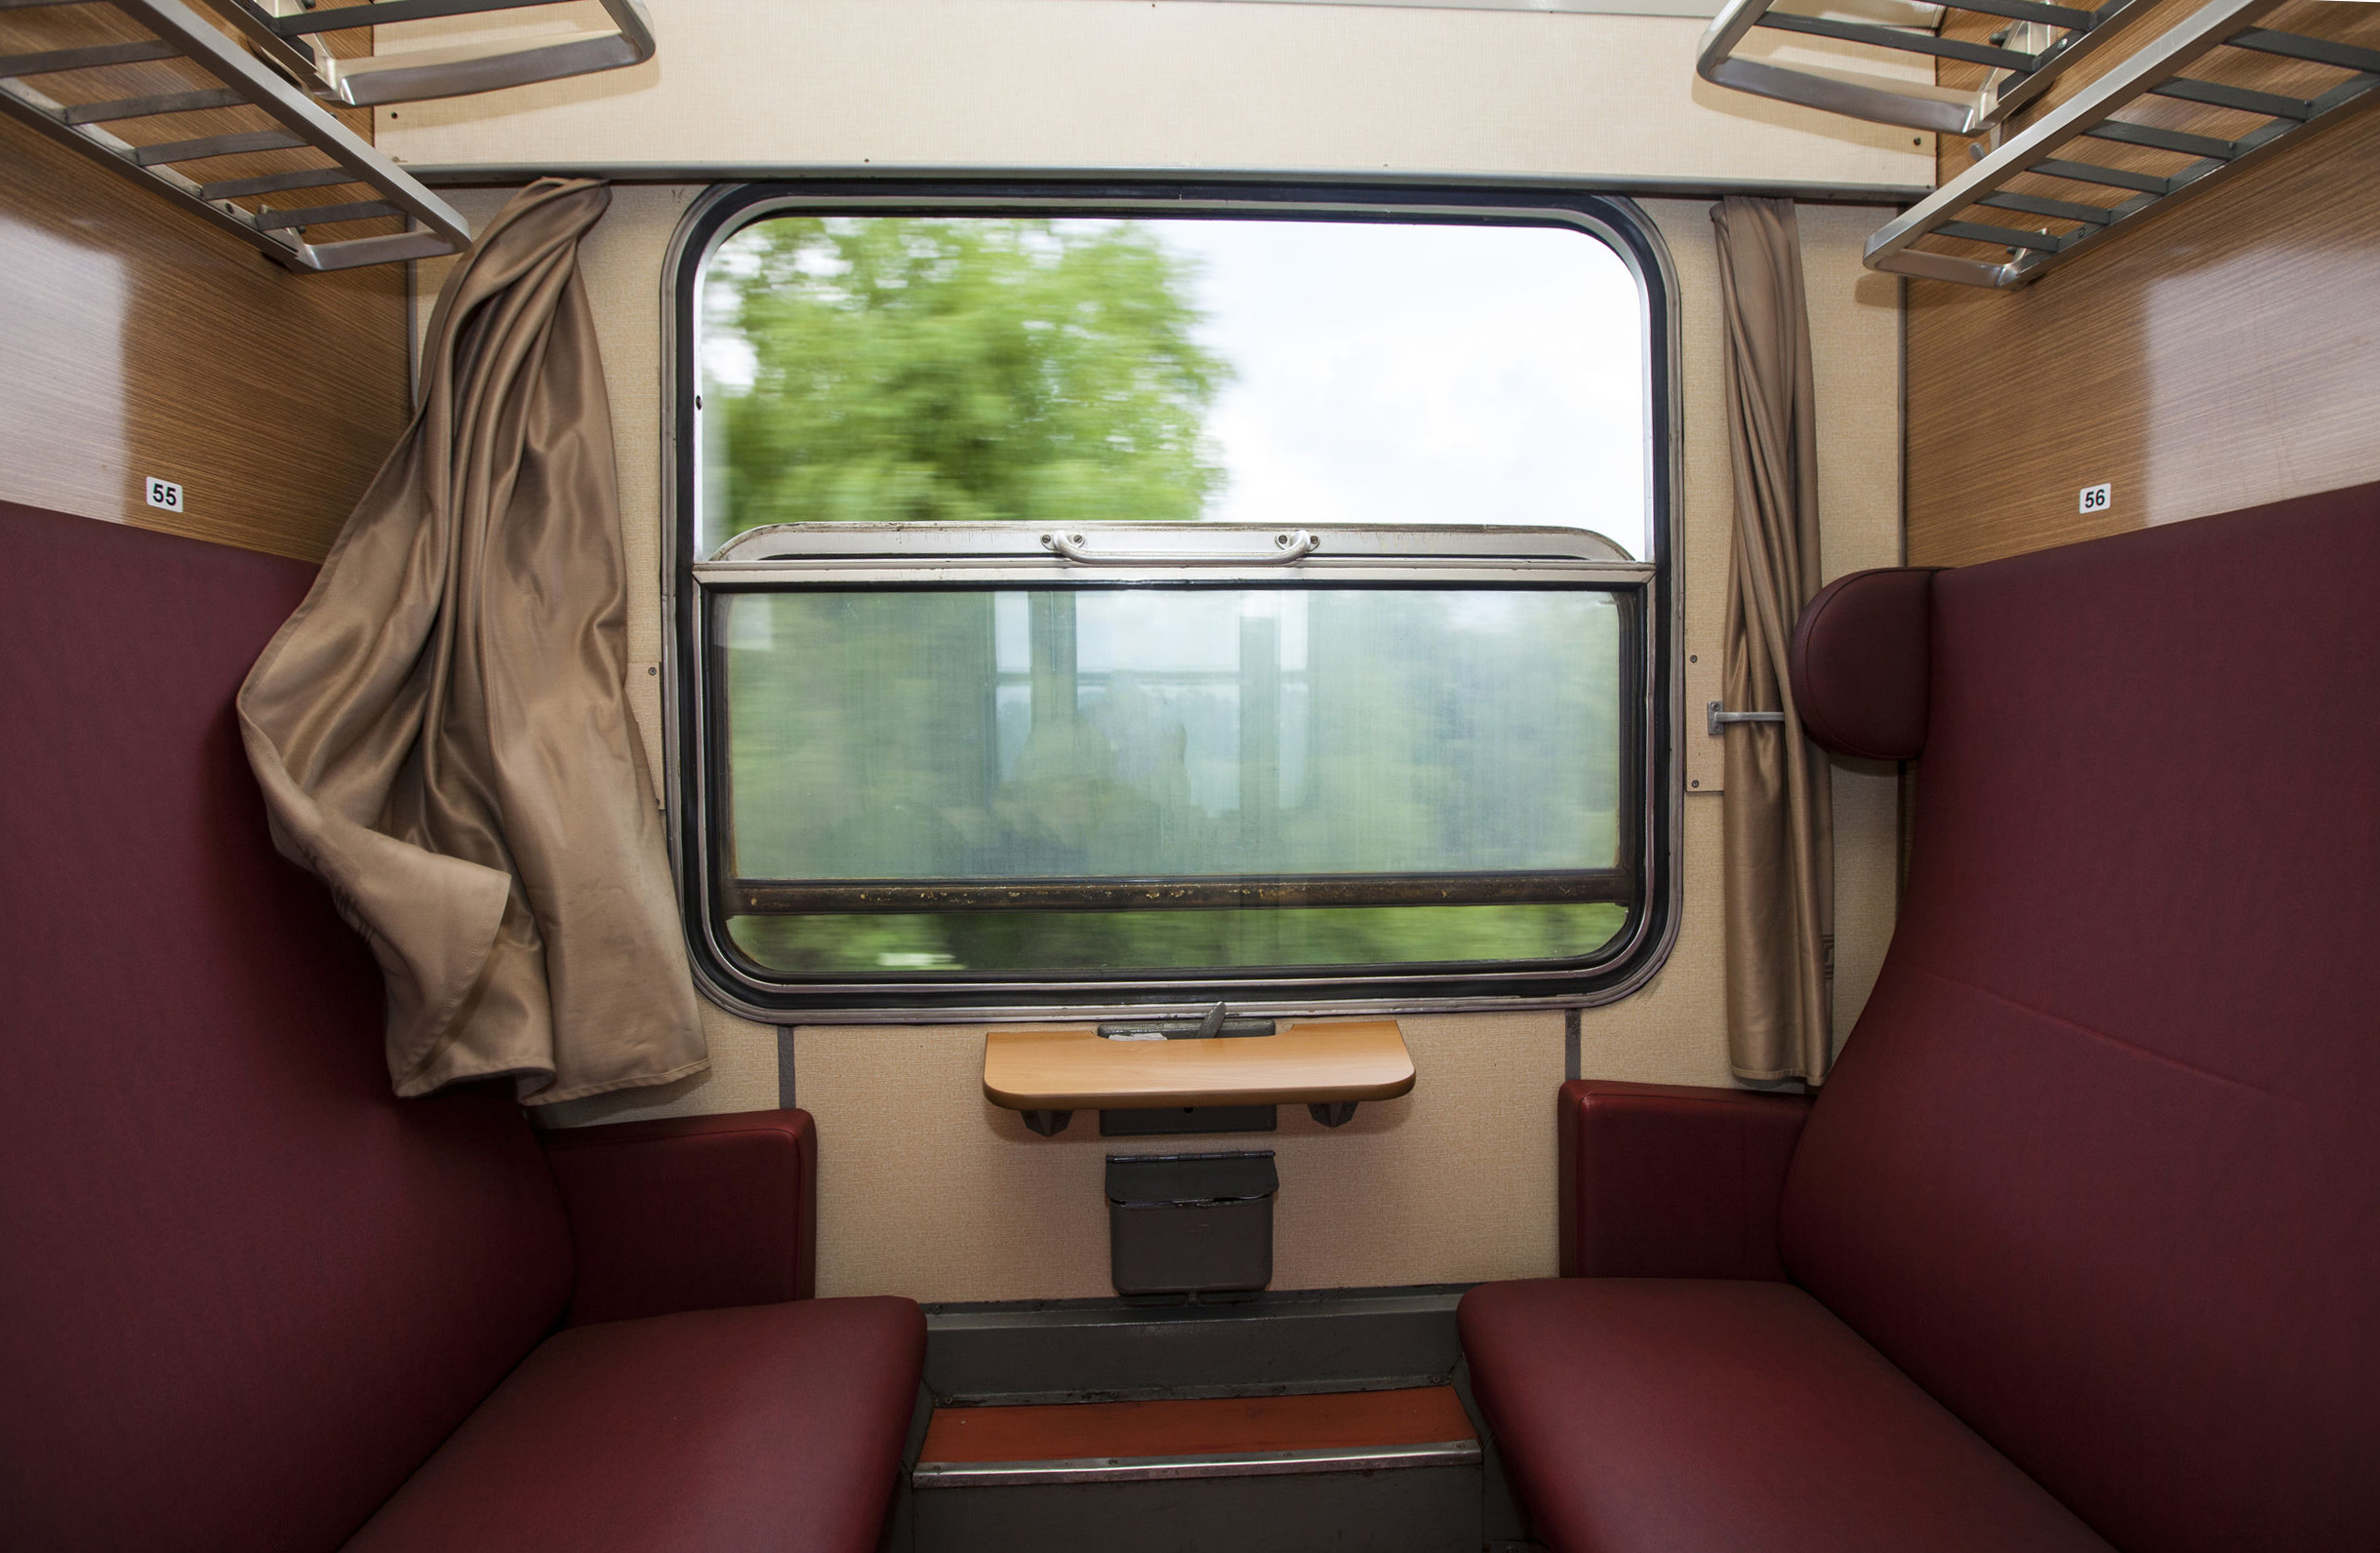 Train compartment,Copyright habrda / 123RF Stock Photo